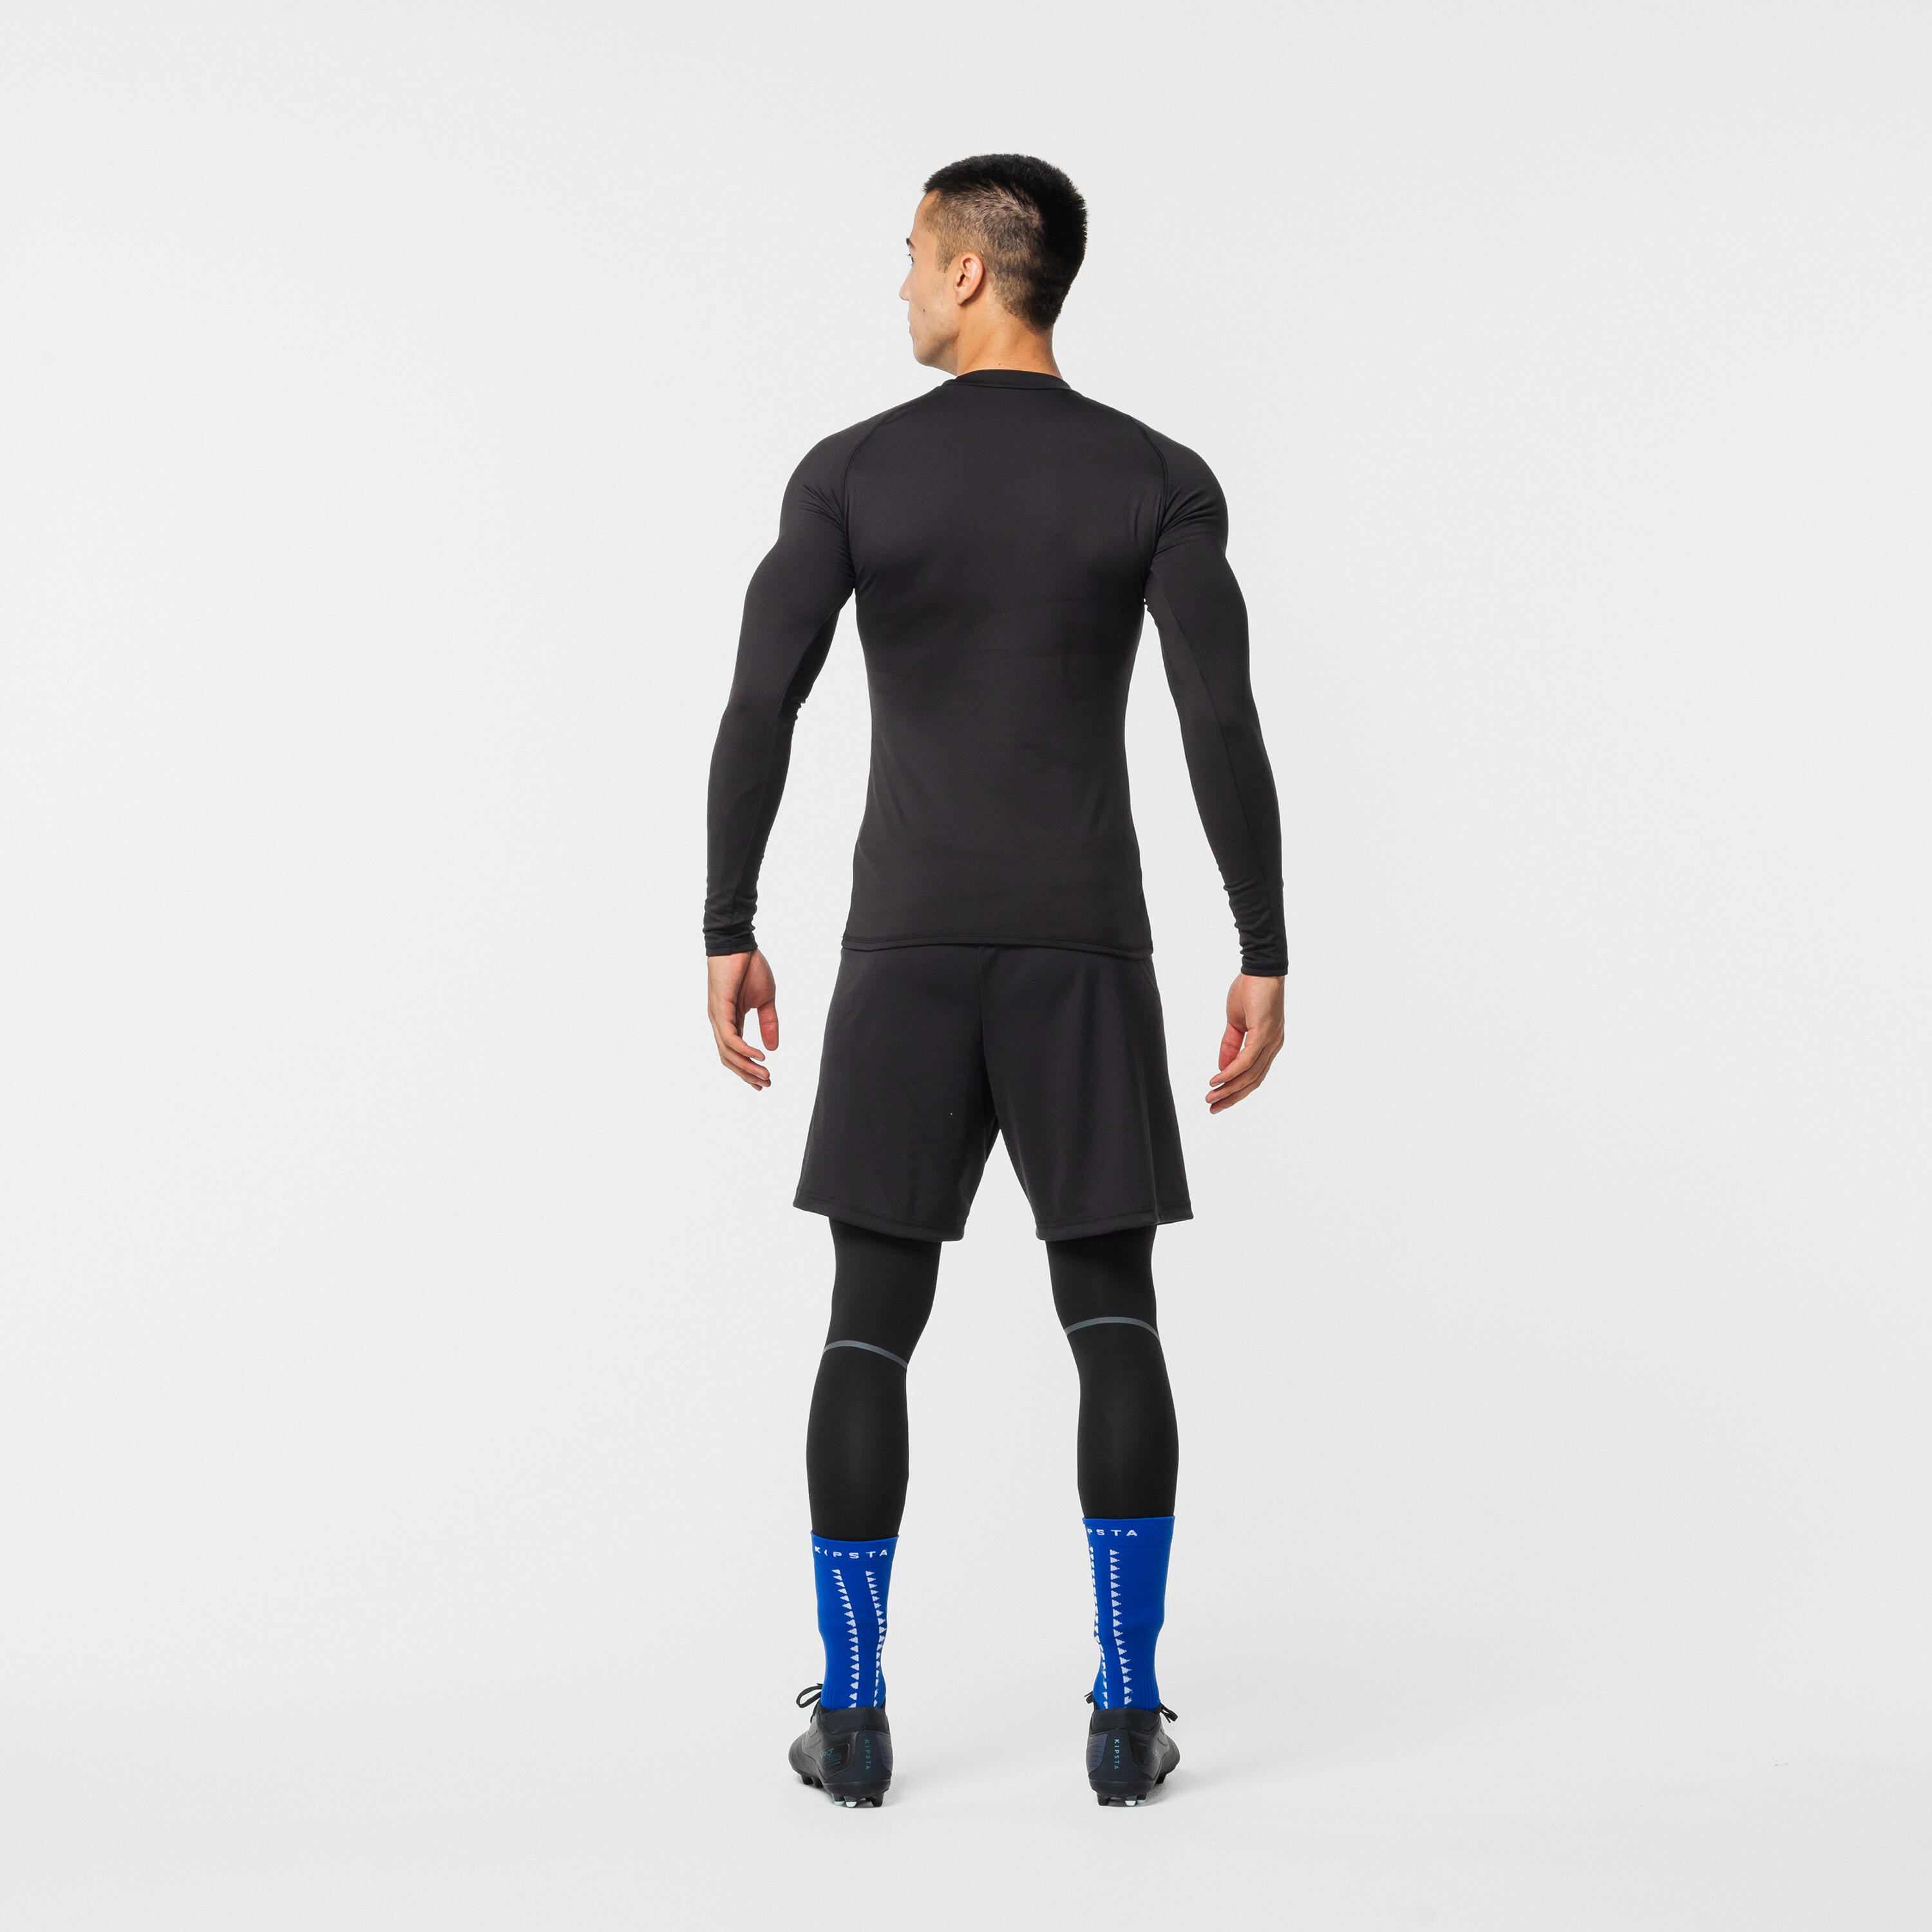 Adult Long-Sleeved Thermal Football Base Layer Top Keepcomfort 100 - Black 7/7